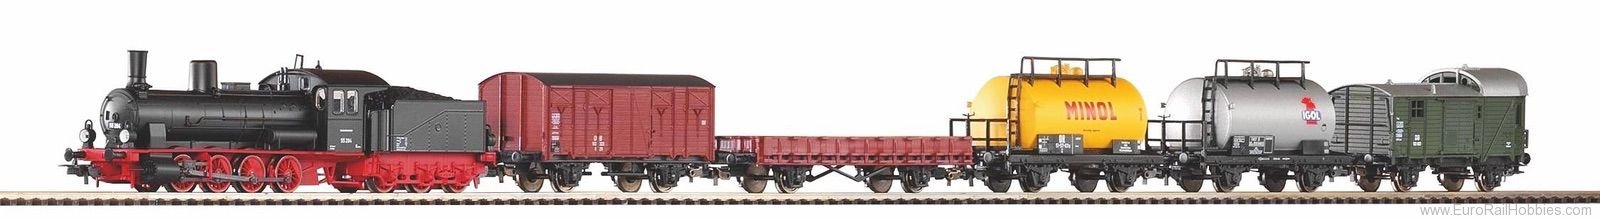 Piko 57123 Starter Set Steam locomotive G7.1 with 5 Frei